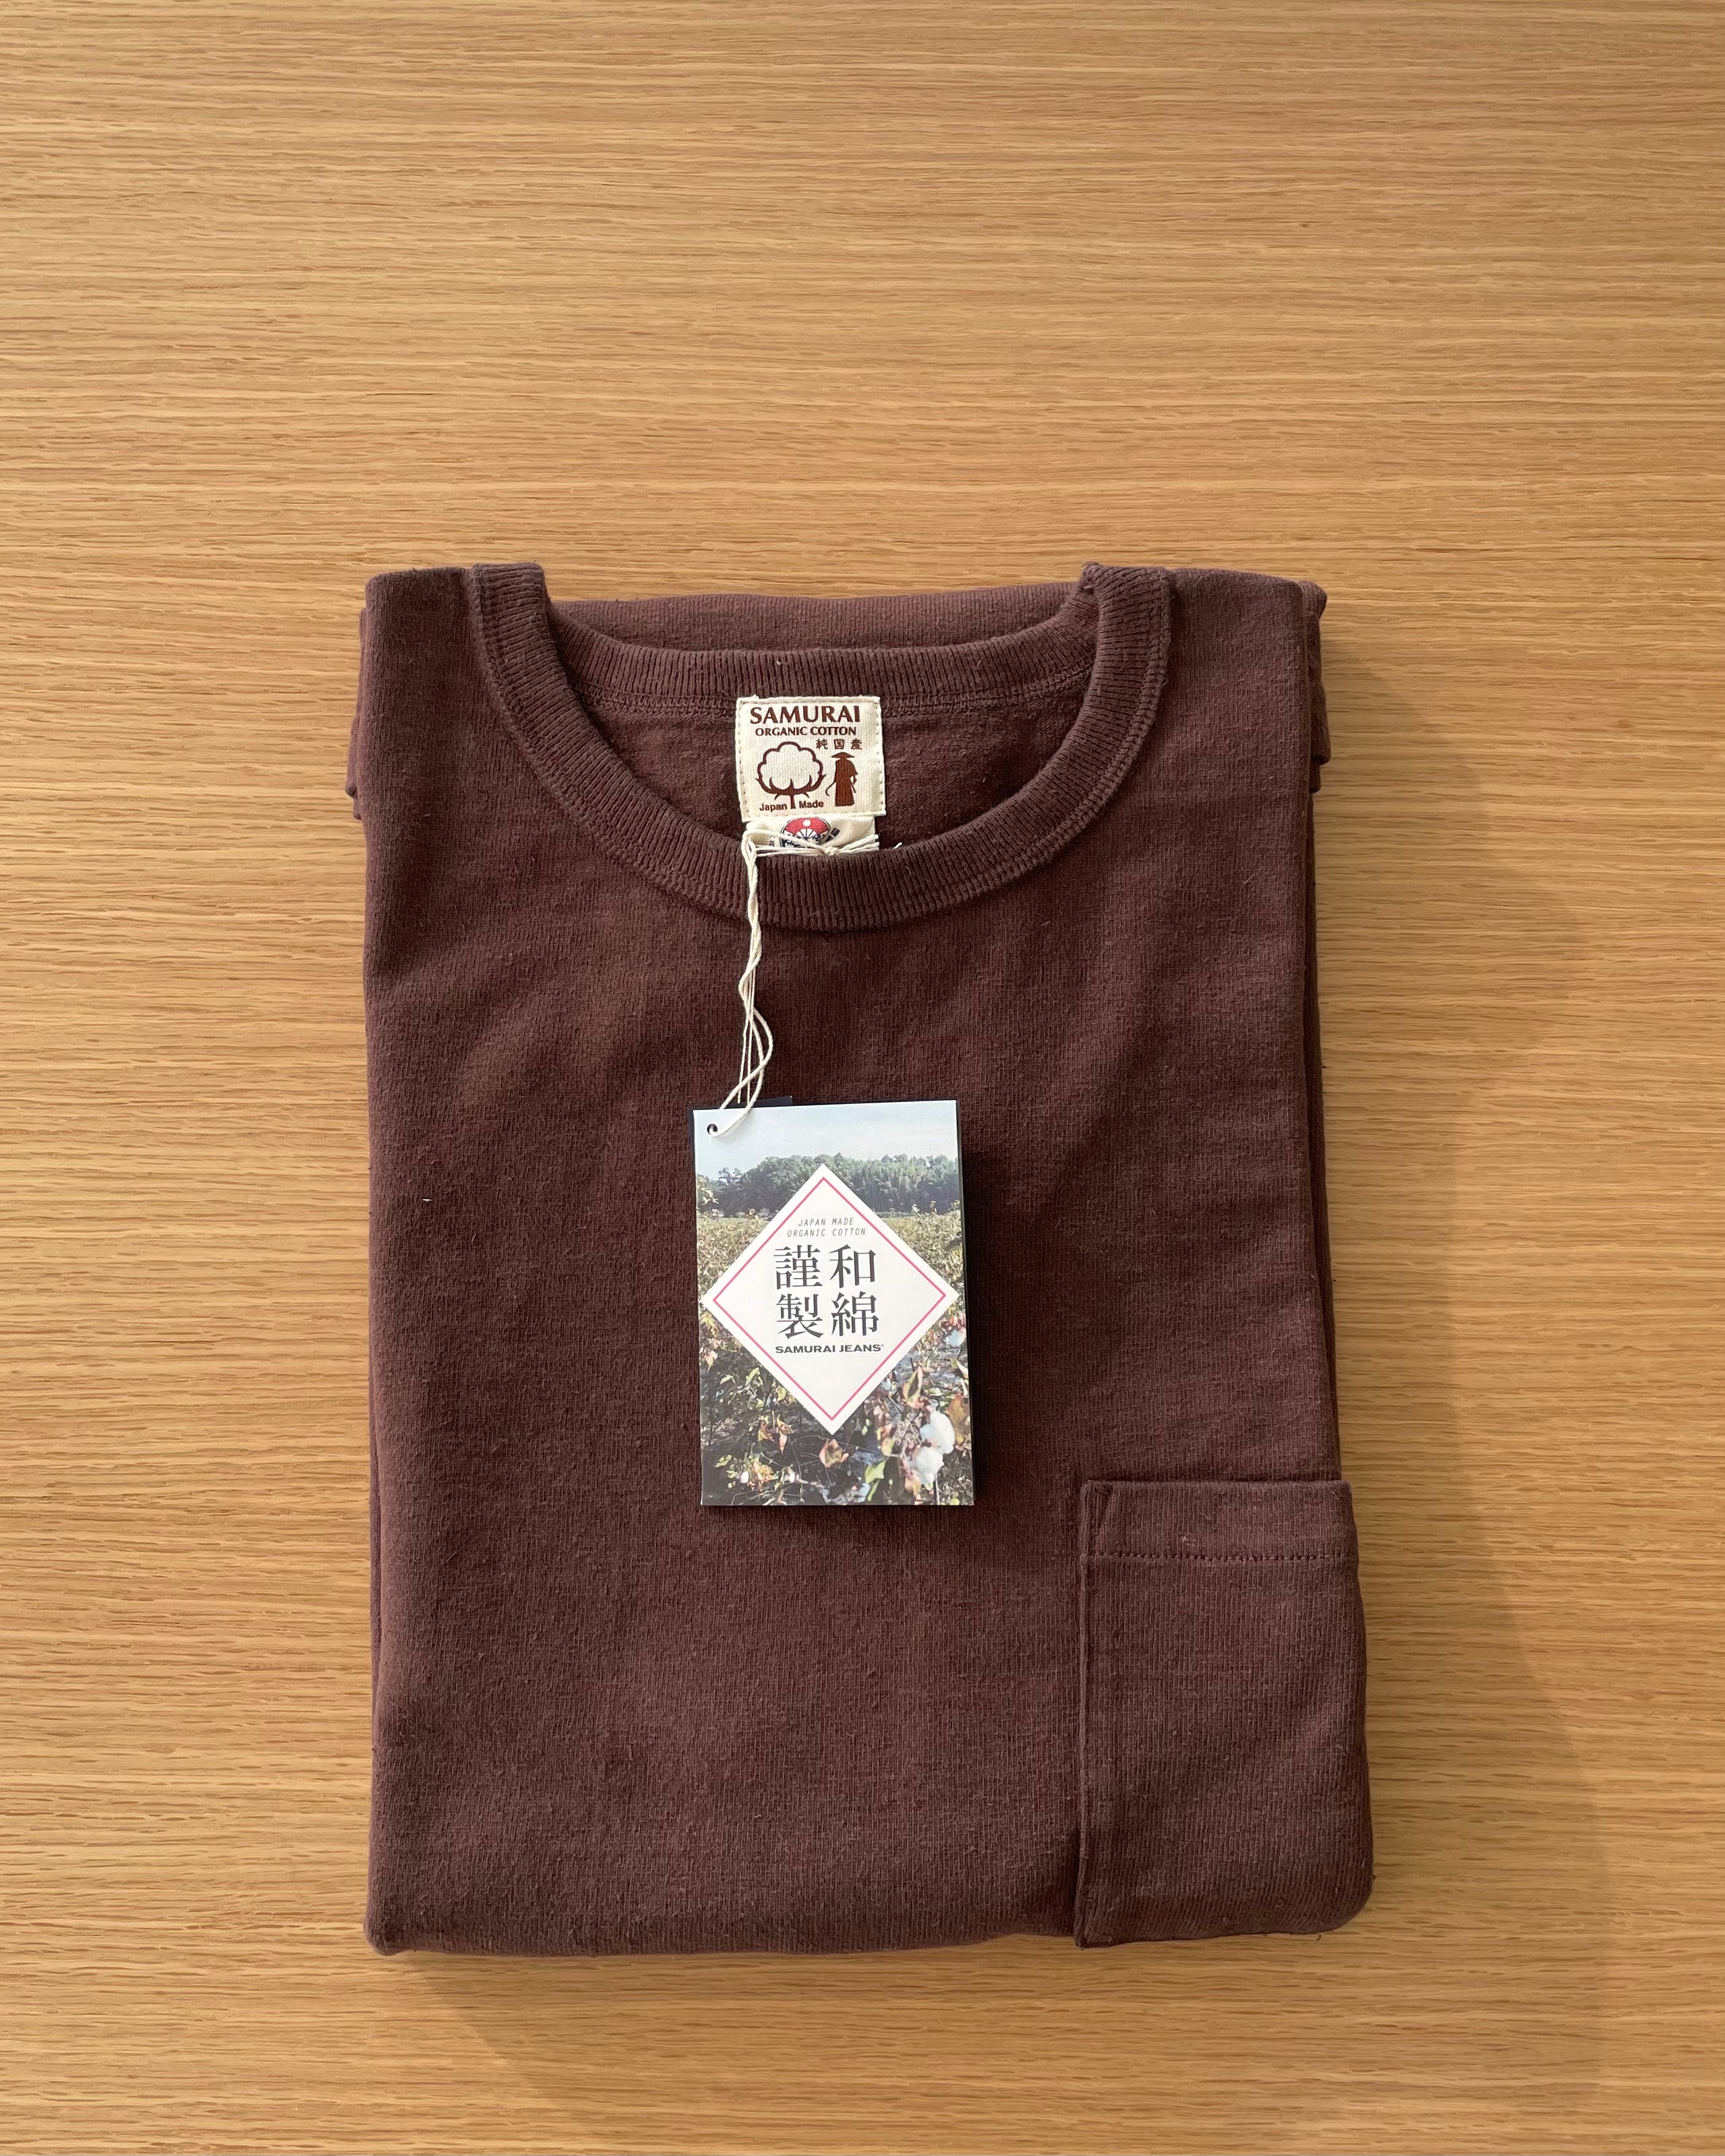 16oz Japanese Organic Cotton T-Shirt Hand-Dyed with Chestnut - Dark Kuri